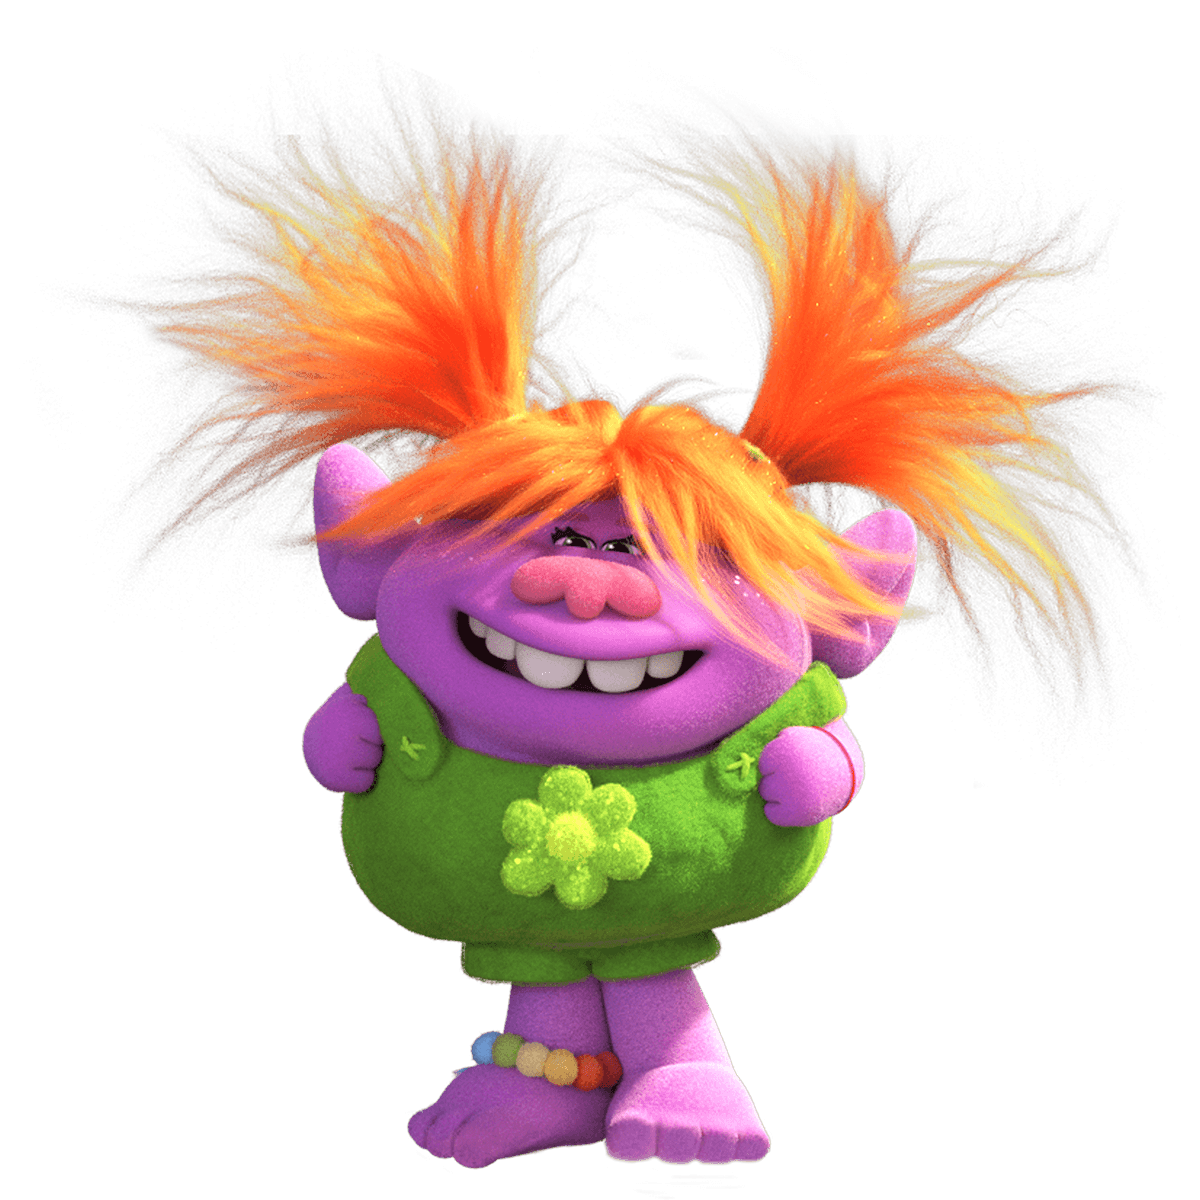 trolls with crazy hair